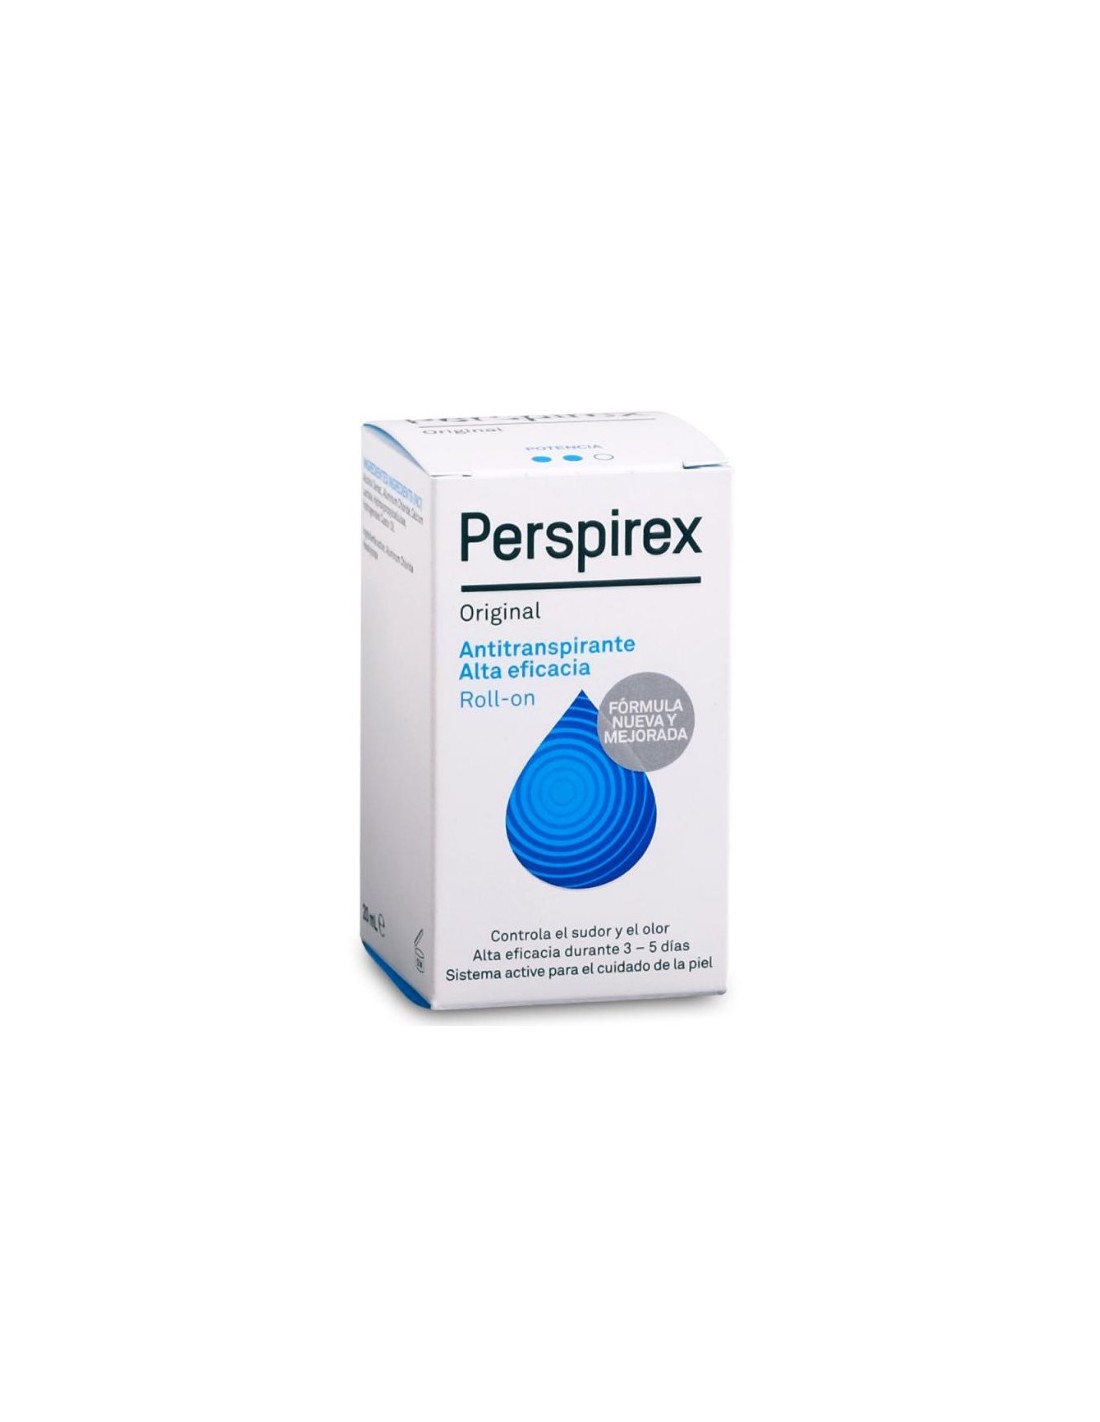 Perspirex, desodorante antitranspirante